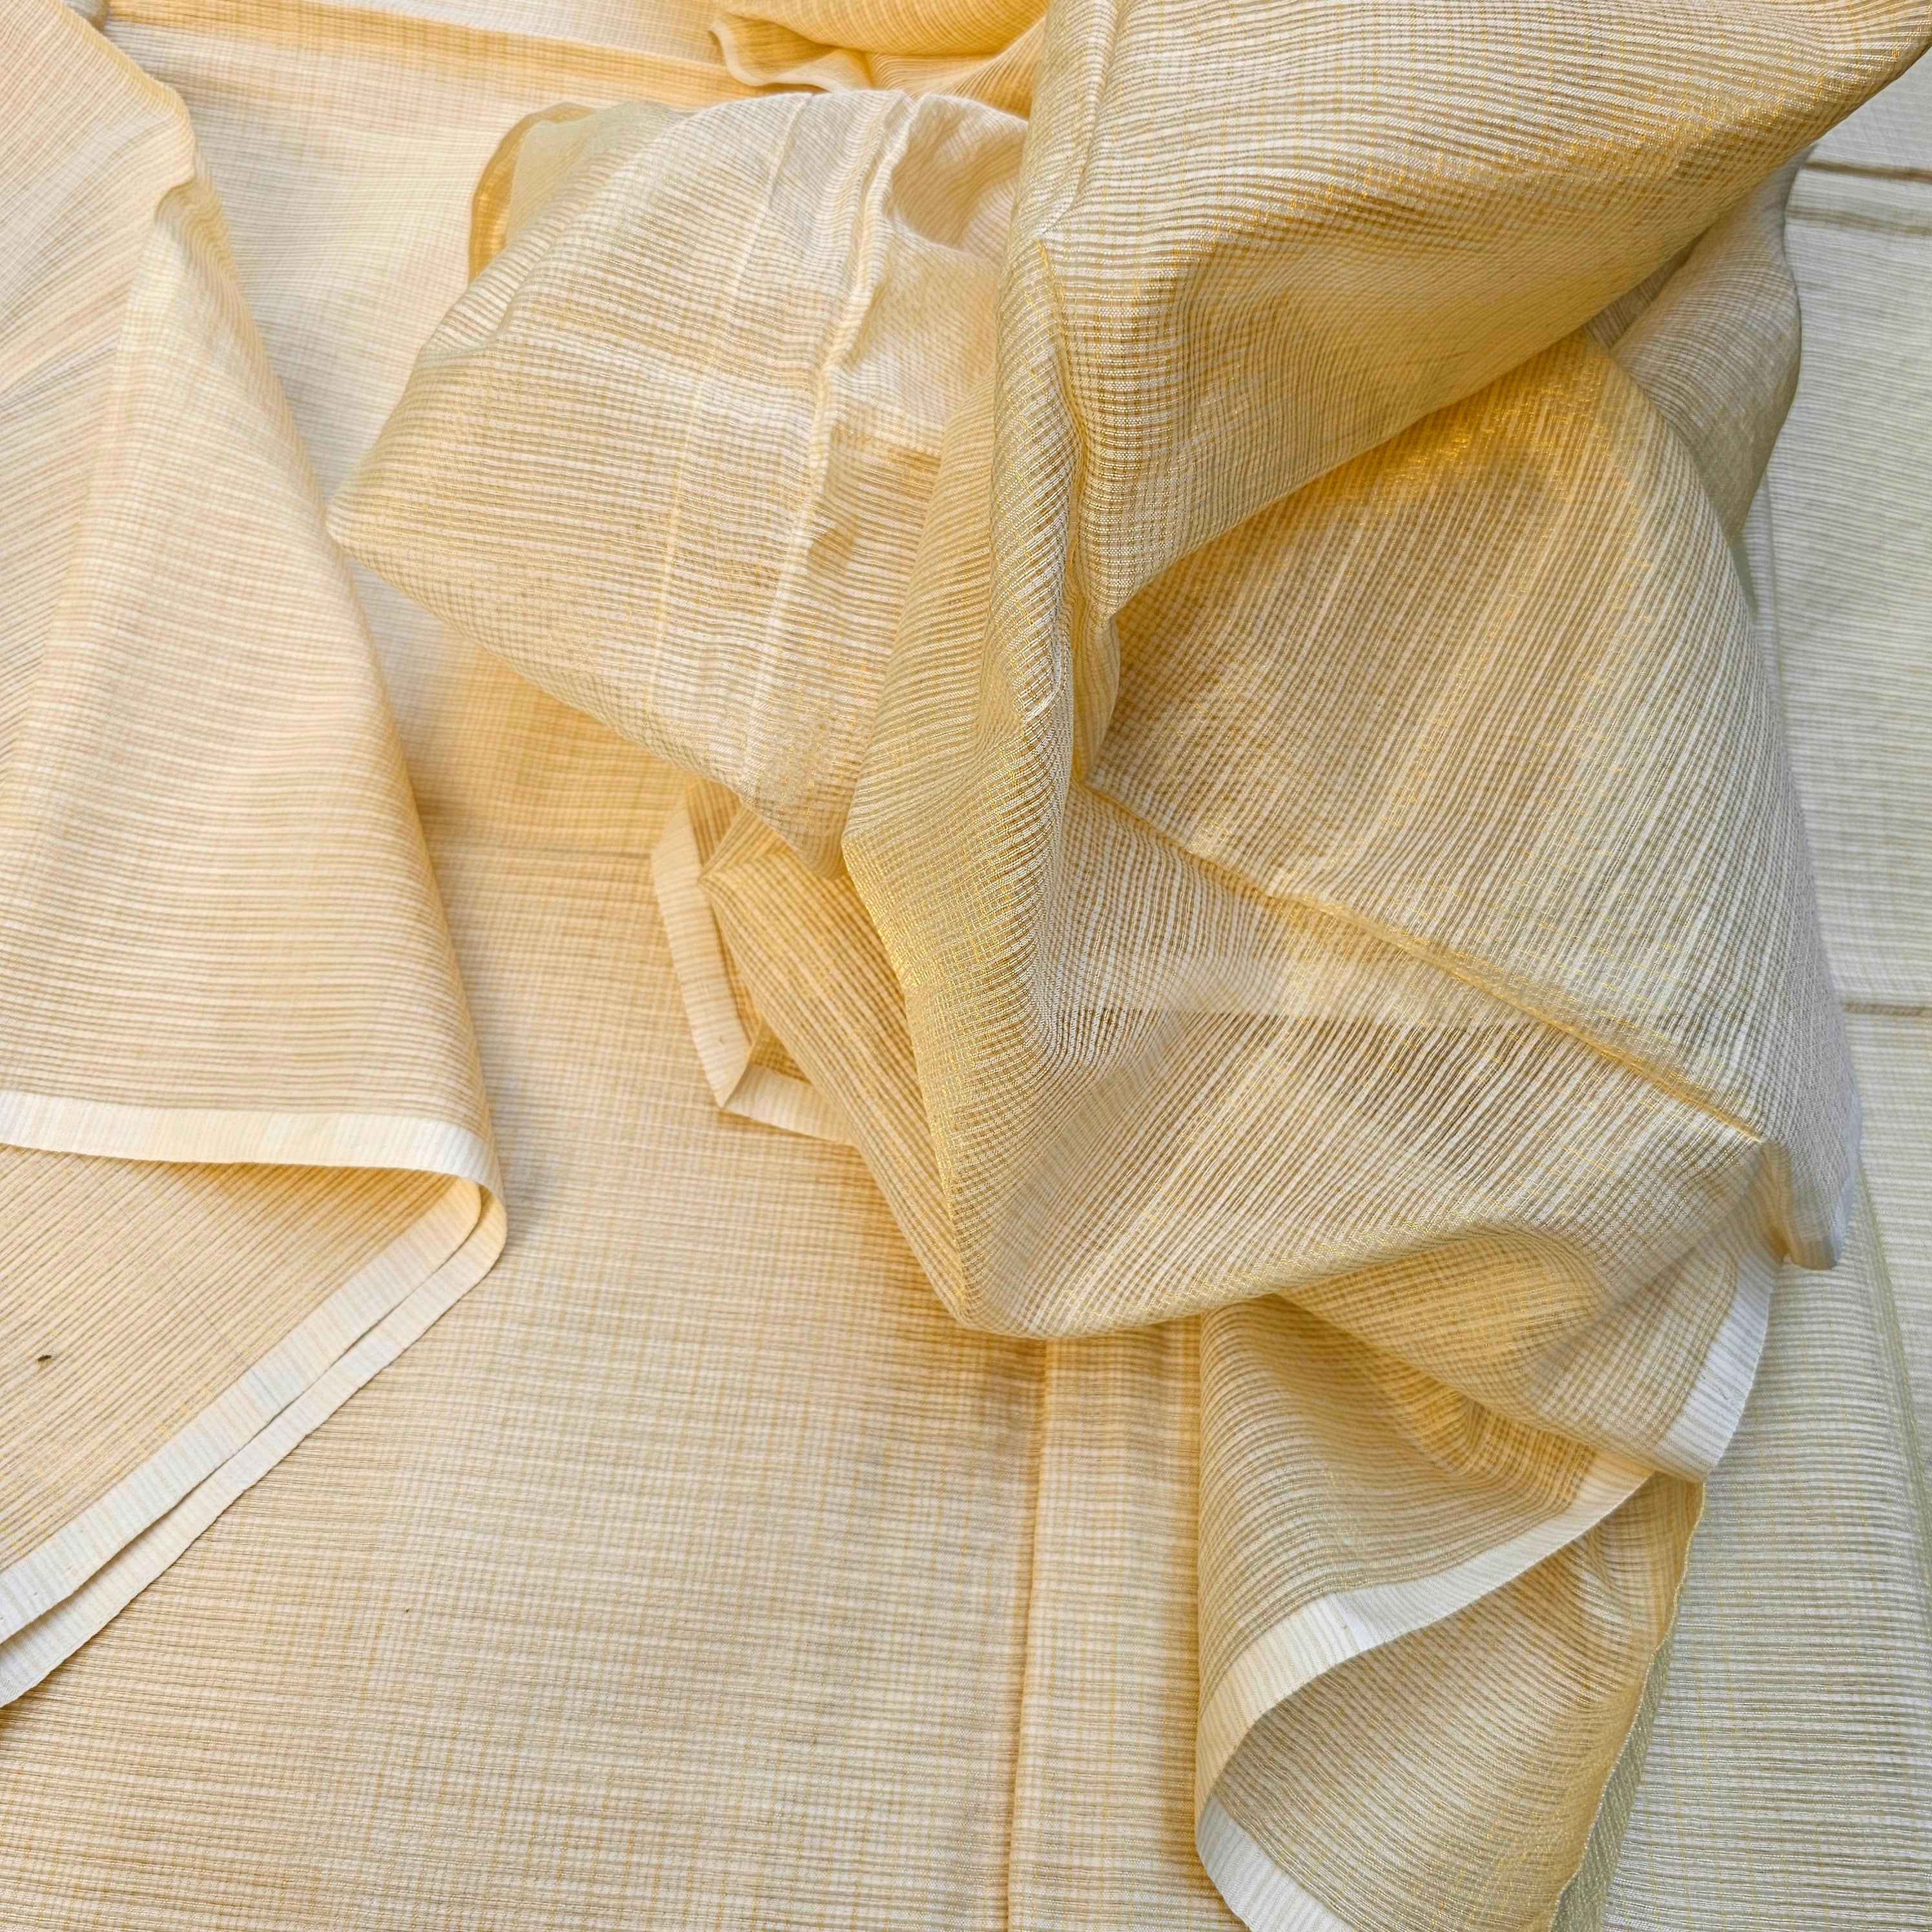 Assam silk handloom saree